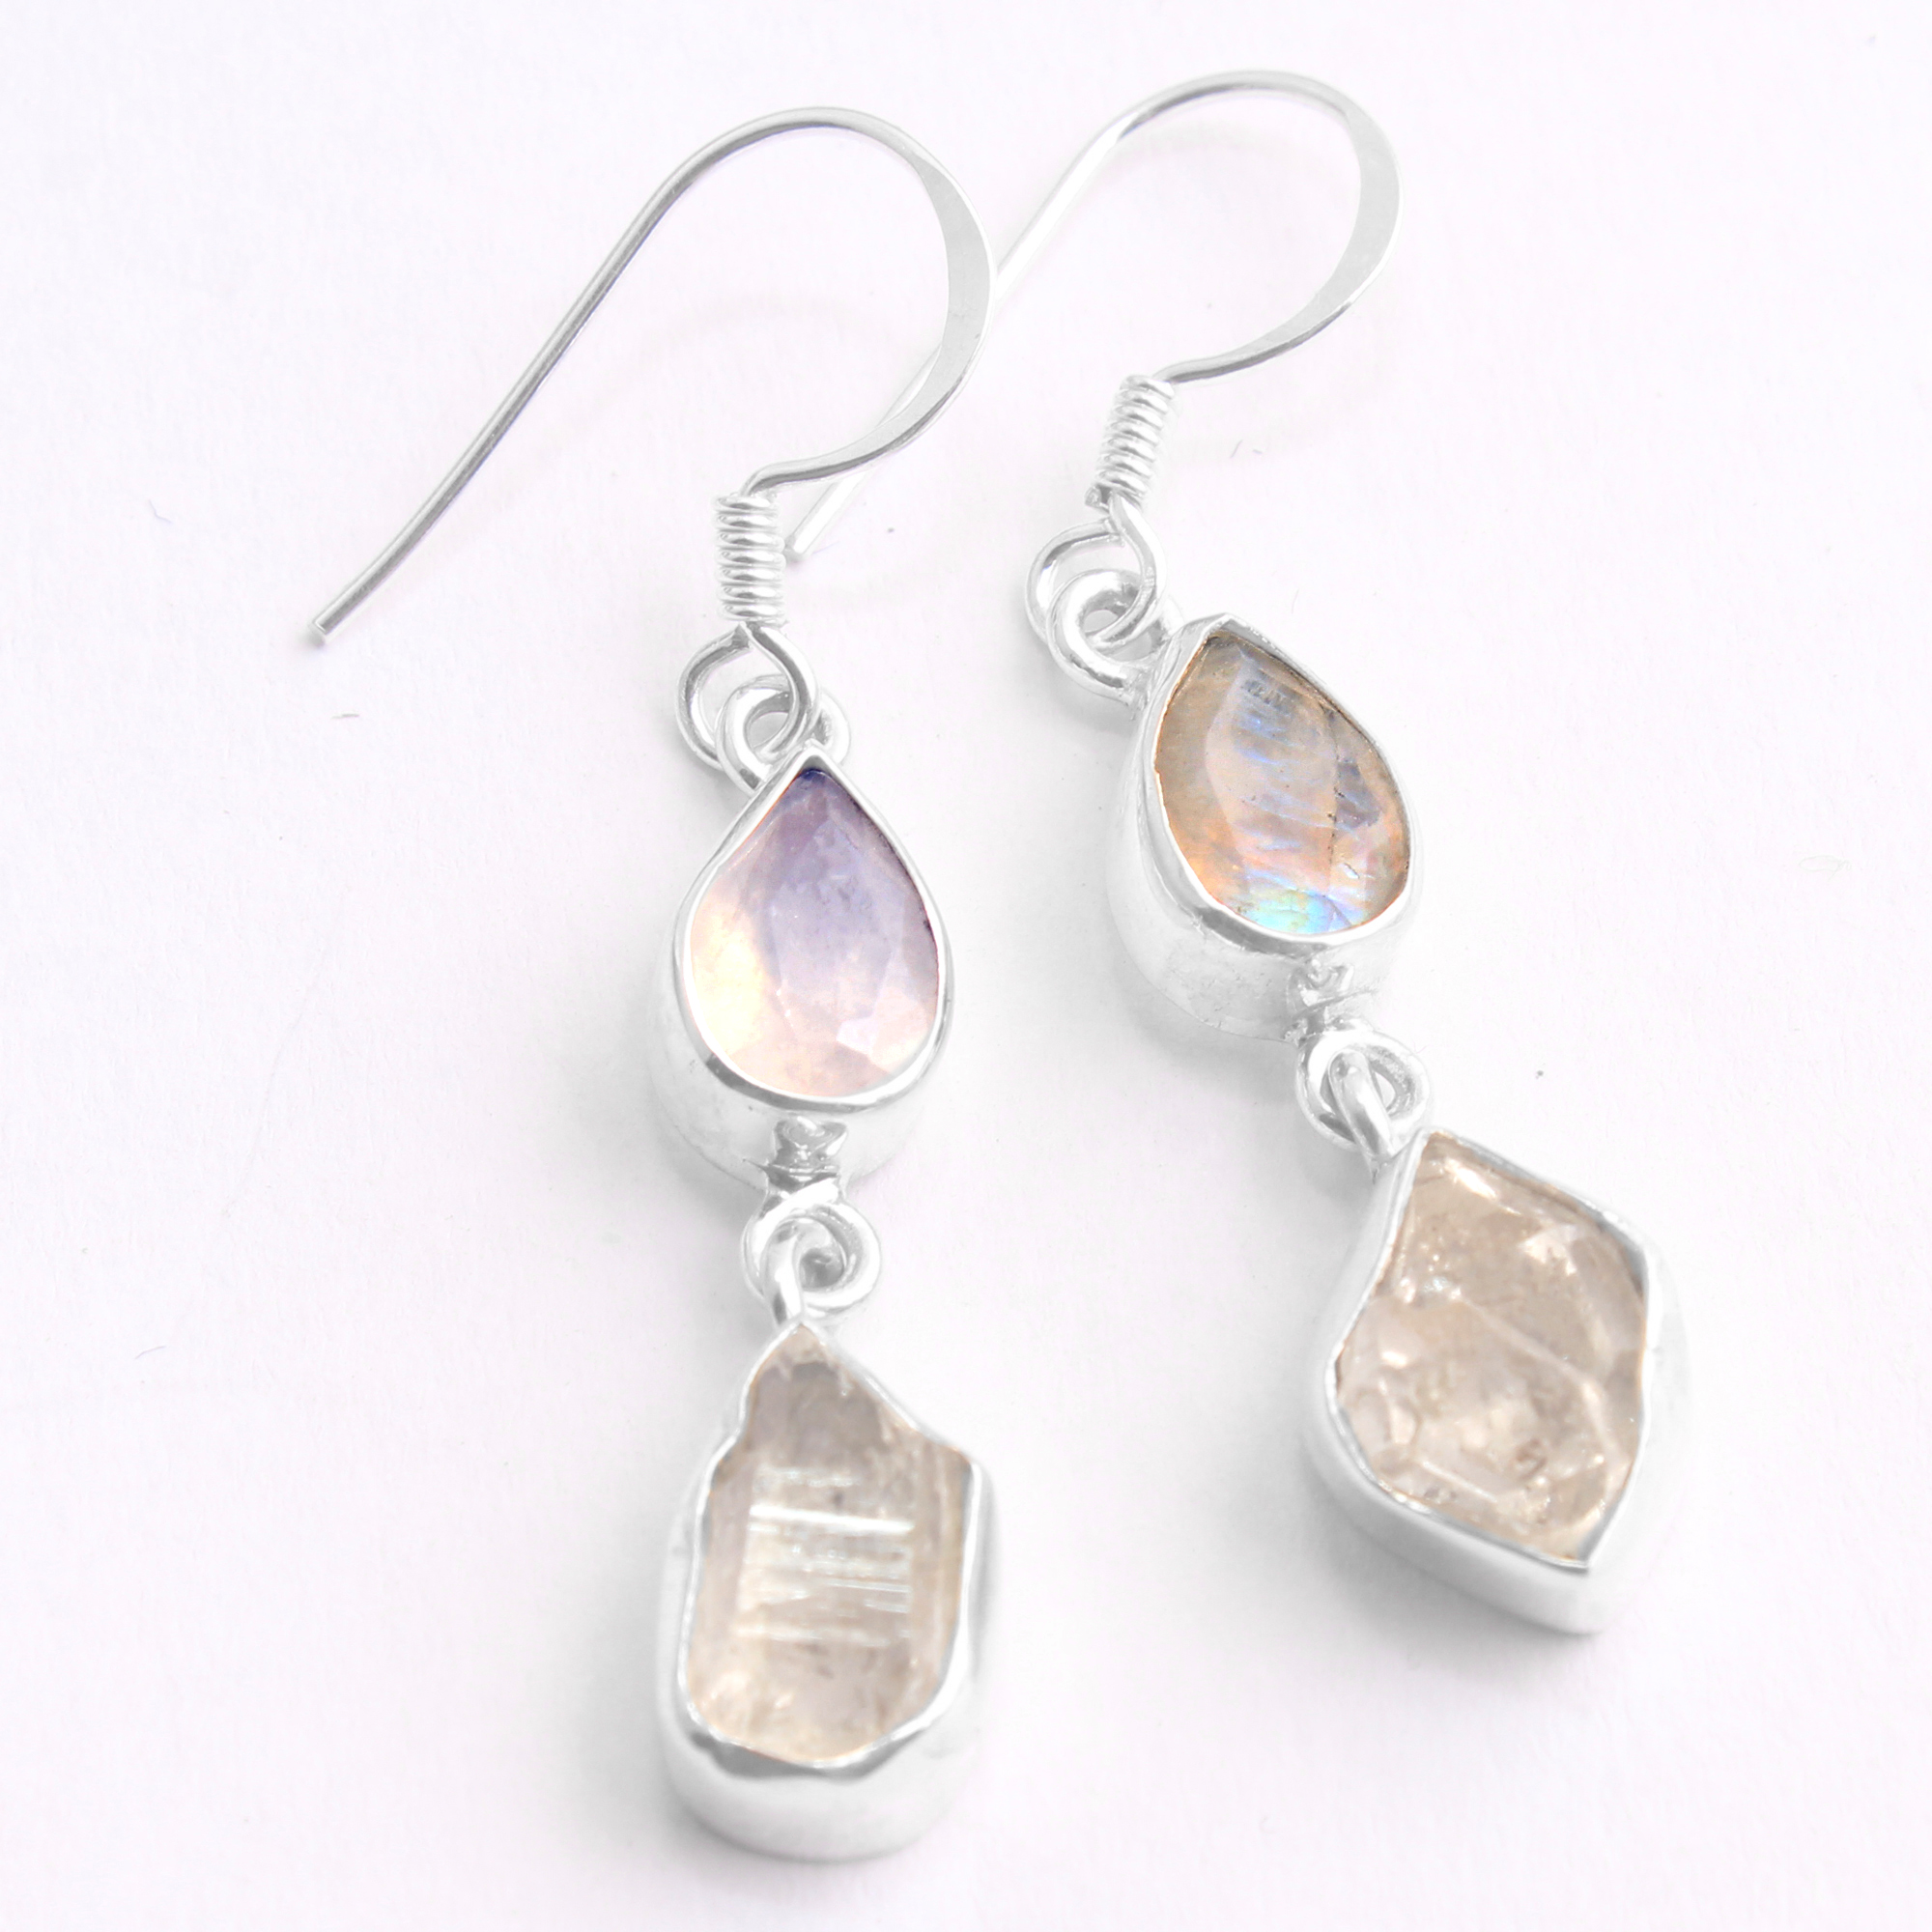 Gemstone Jewelry Herkimer Jewelry Moonstone Earring Silver Jewelry